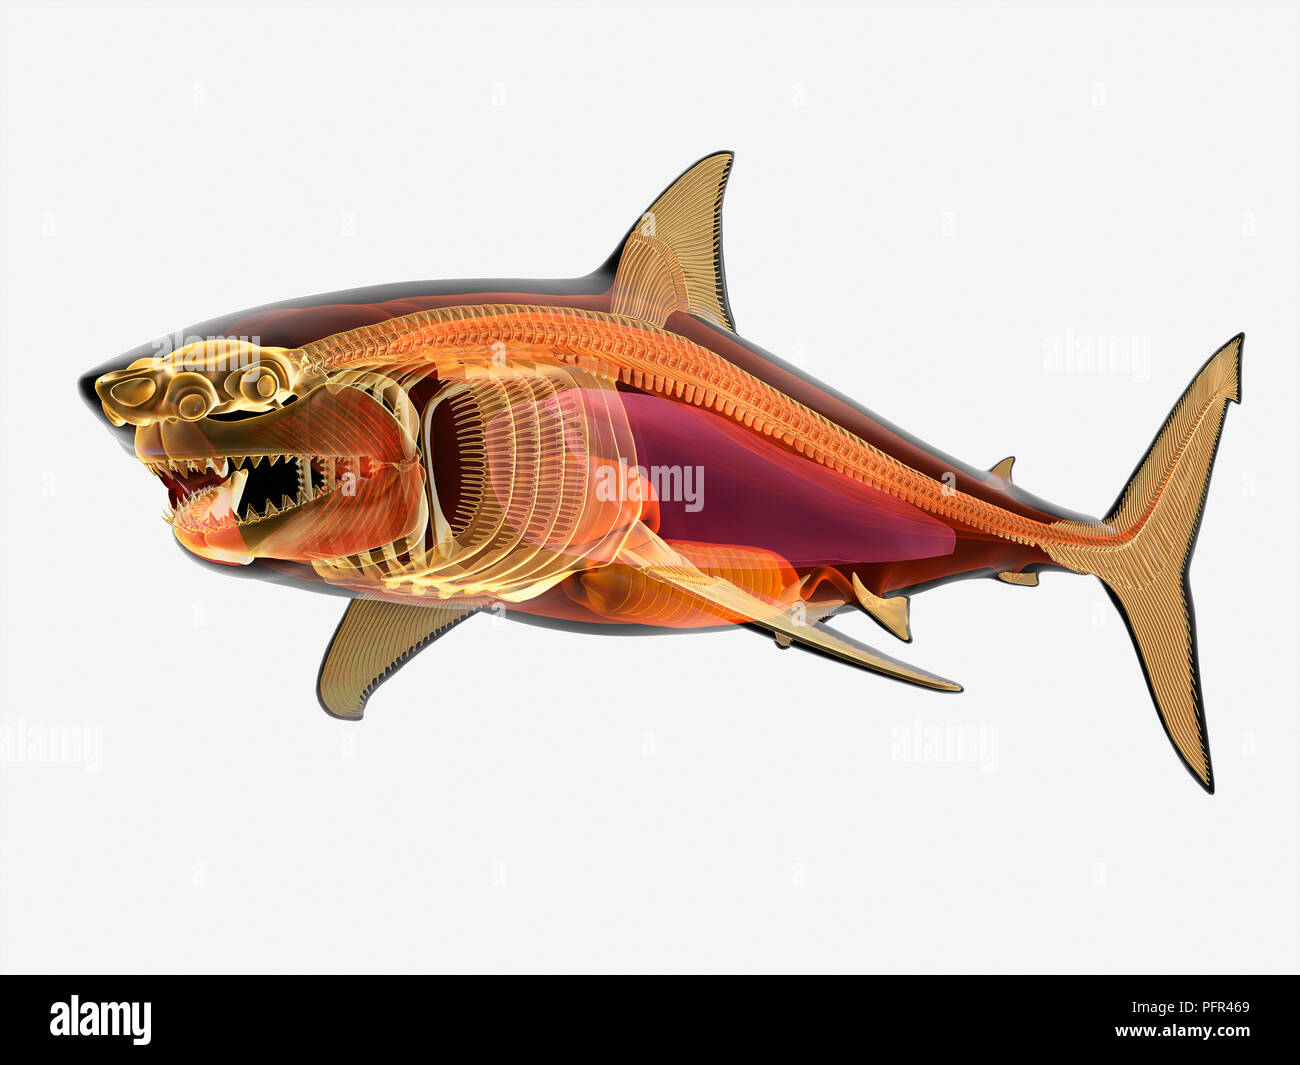 Illustration, anatomy of Great white shark (Carcharodon carcharias) Stock Photo